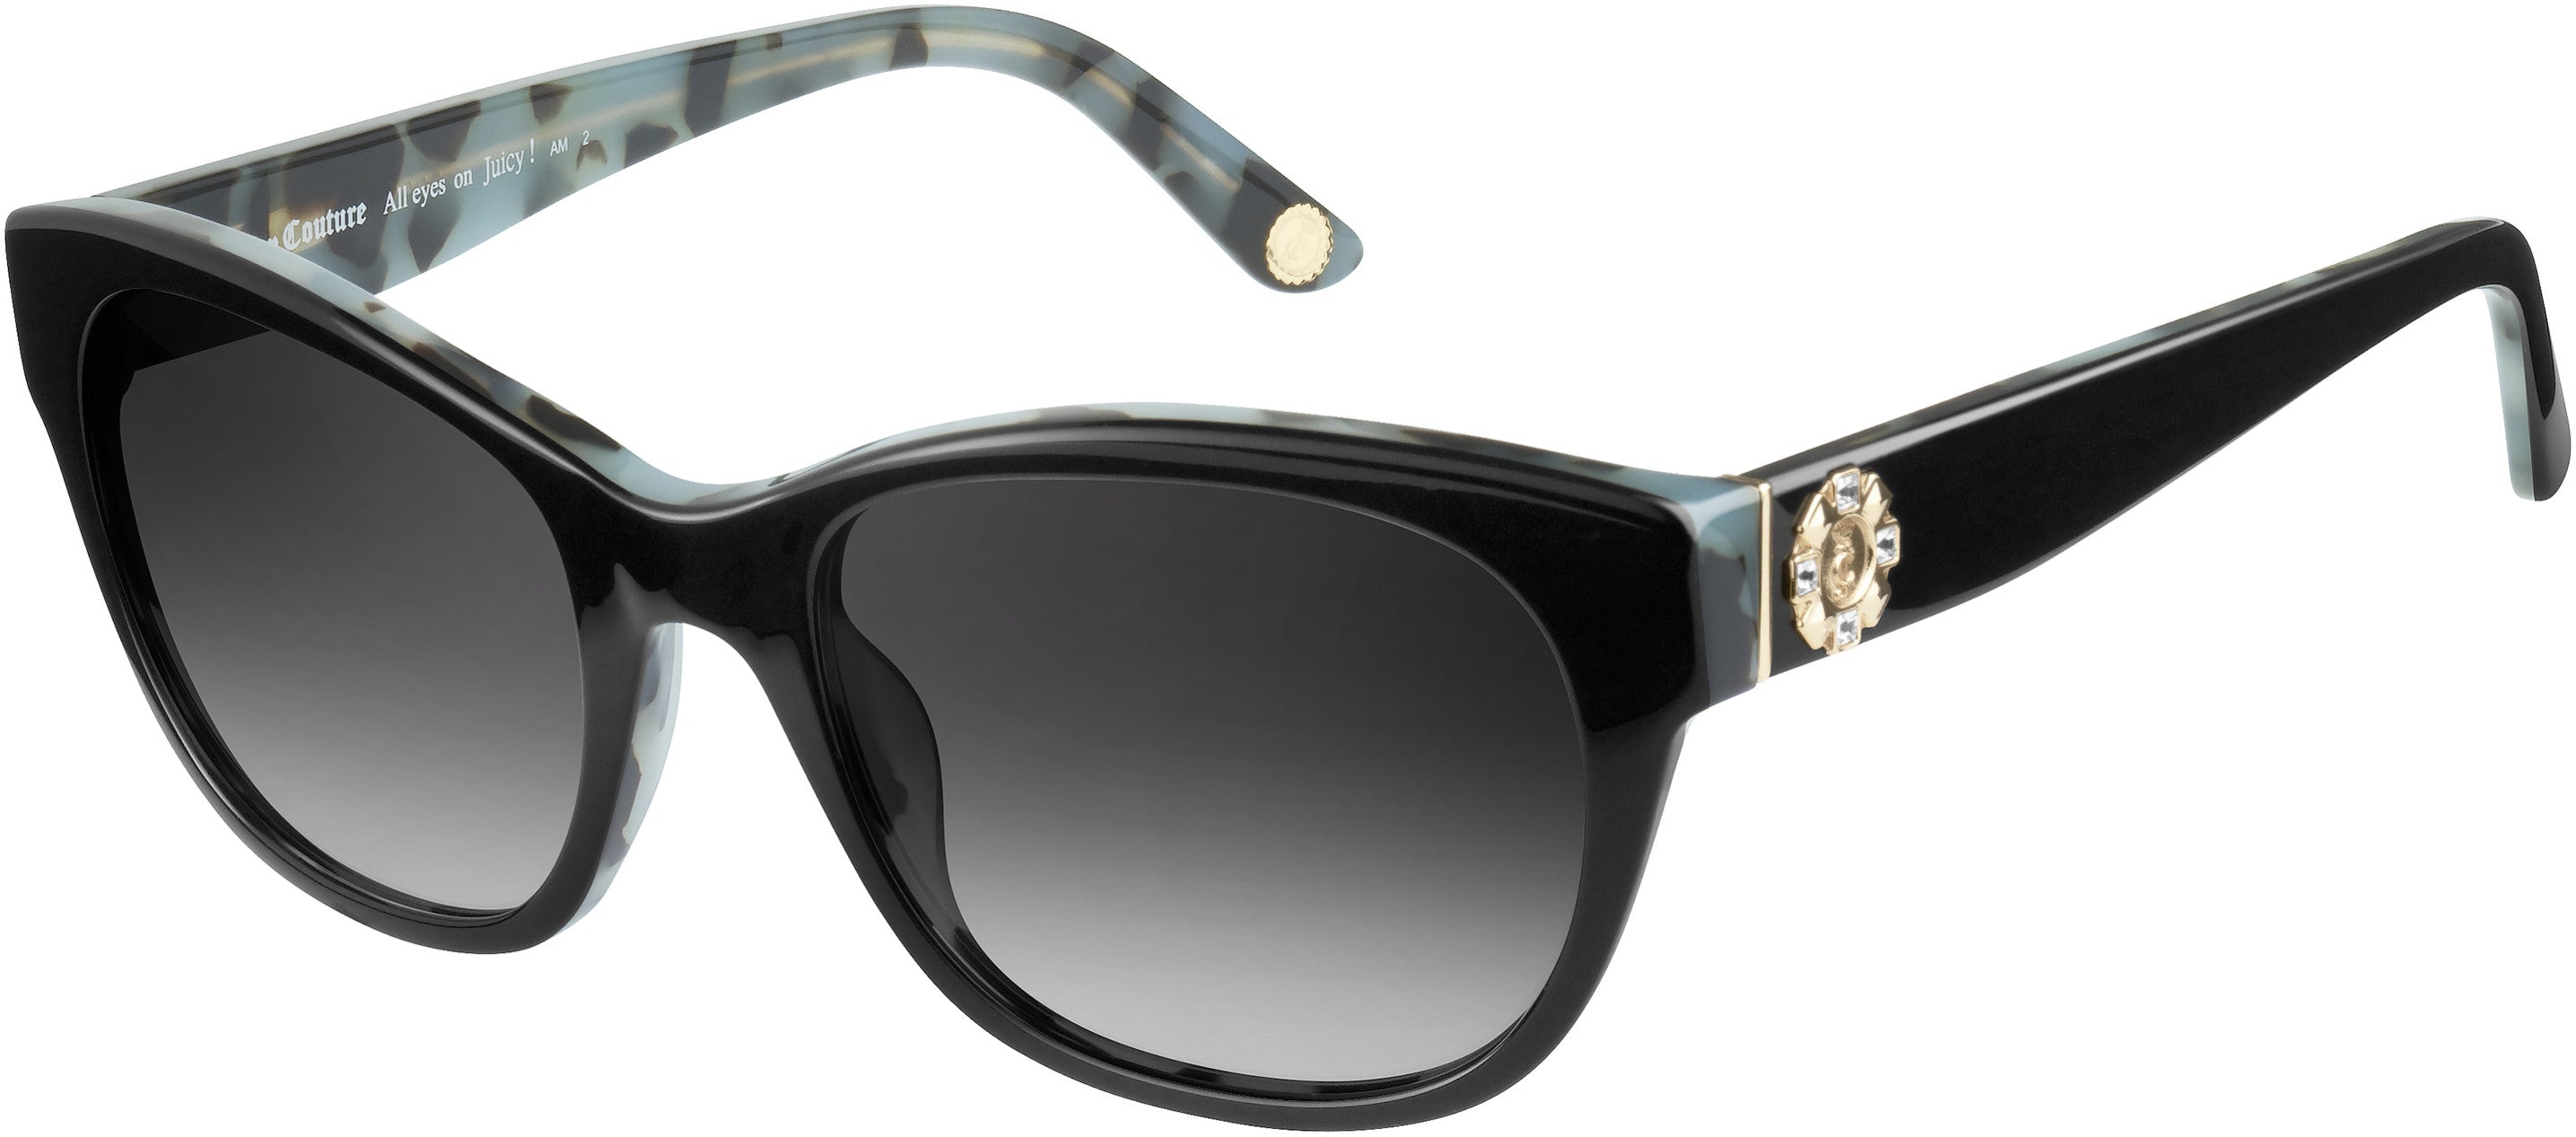 Juicy Couture Juicy 587/S Square Sunglasses 0WR7-0WR7  Black Havana (9O Dark Gray Gradient)